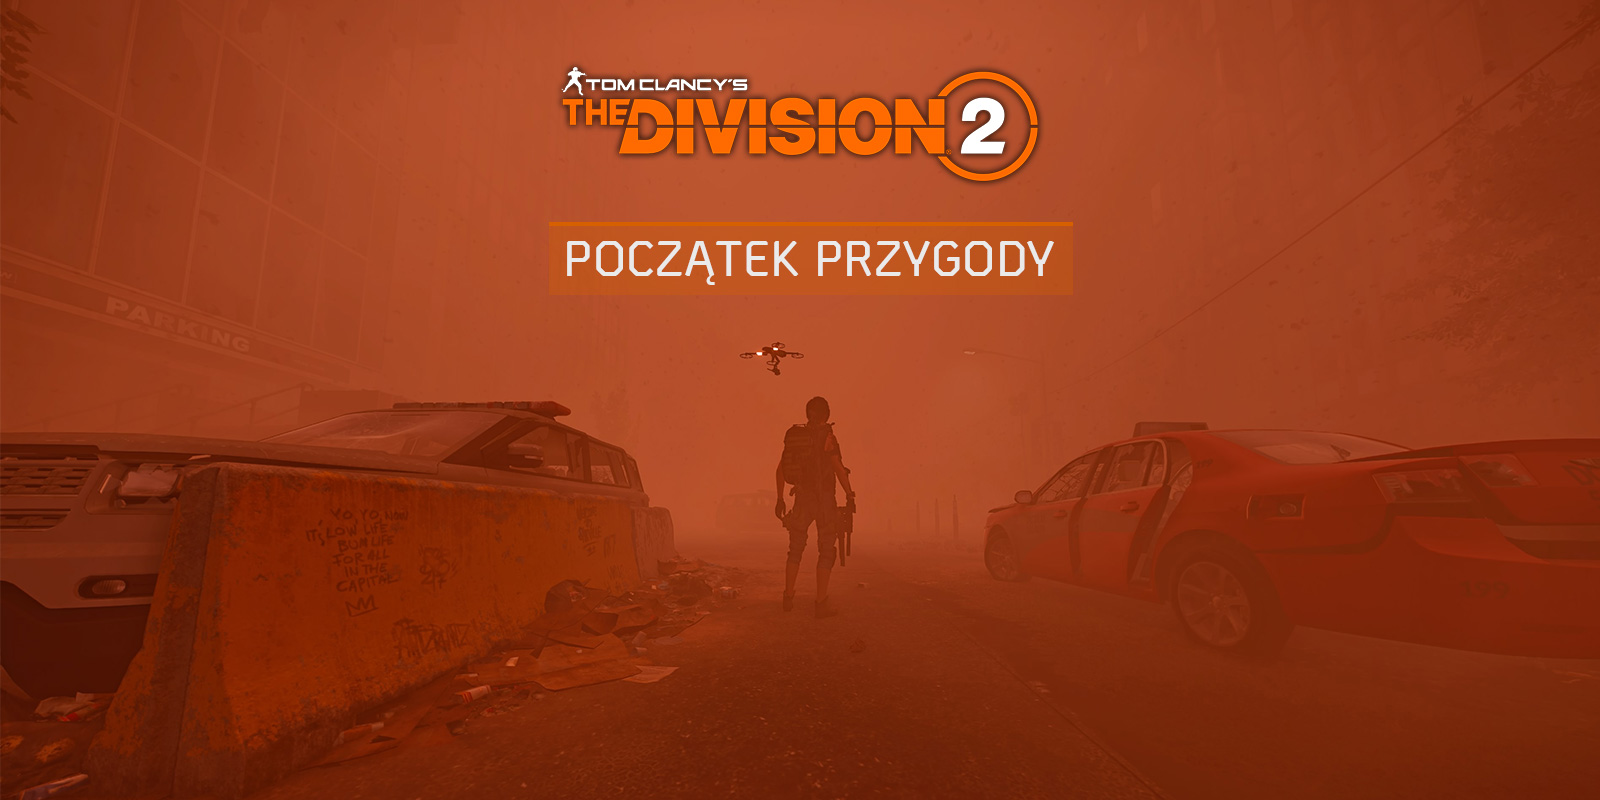 The Division 2: Początek